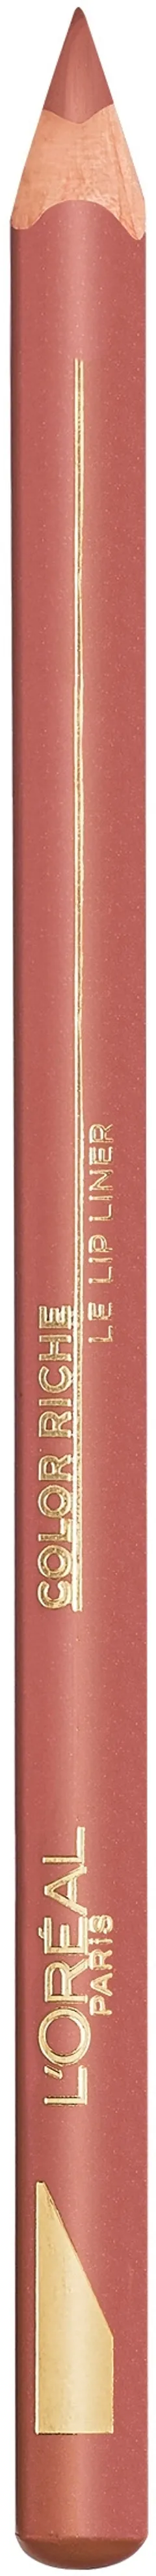 L'Oréal Paris Color Riche 630 Beige A Nu huultenrajauskynä 1,2 g - 1